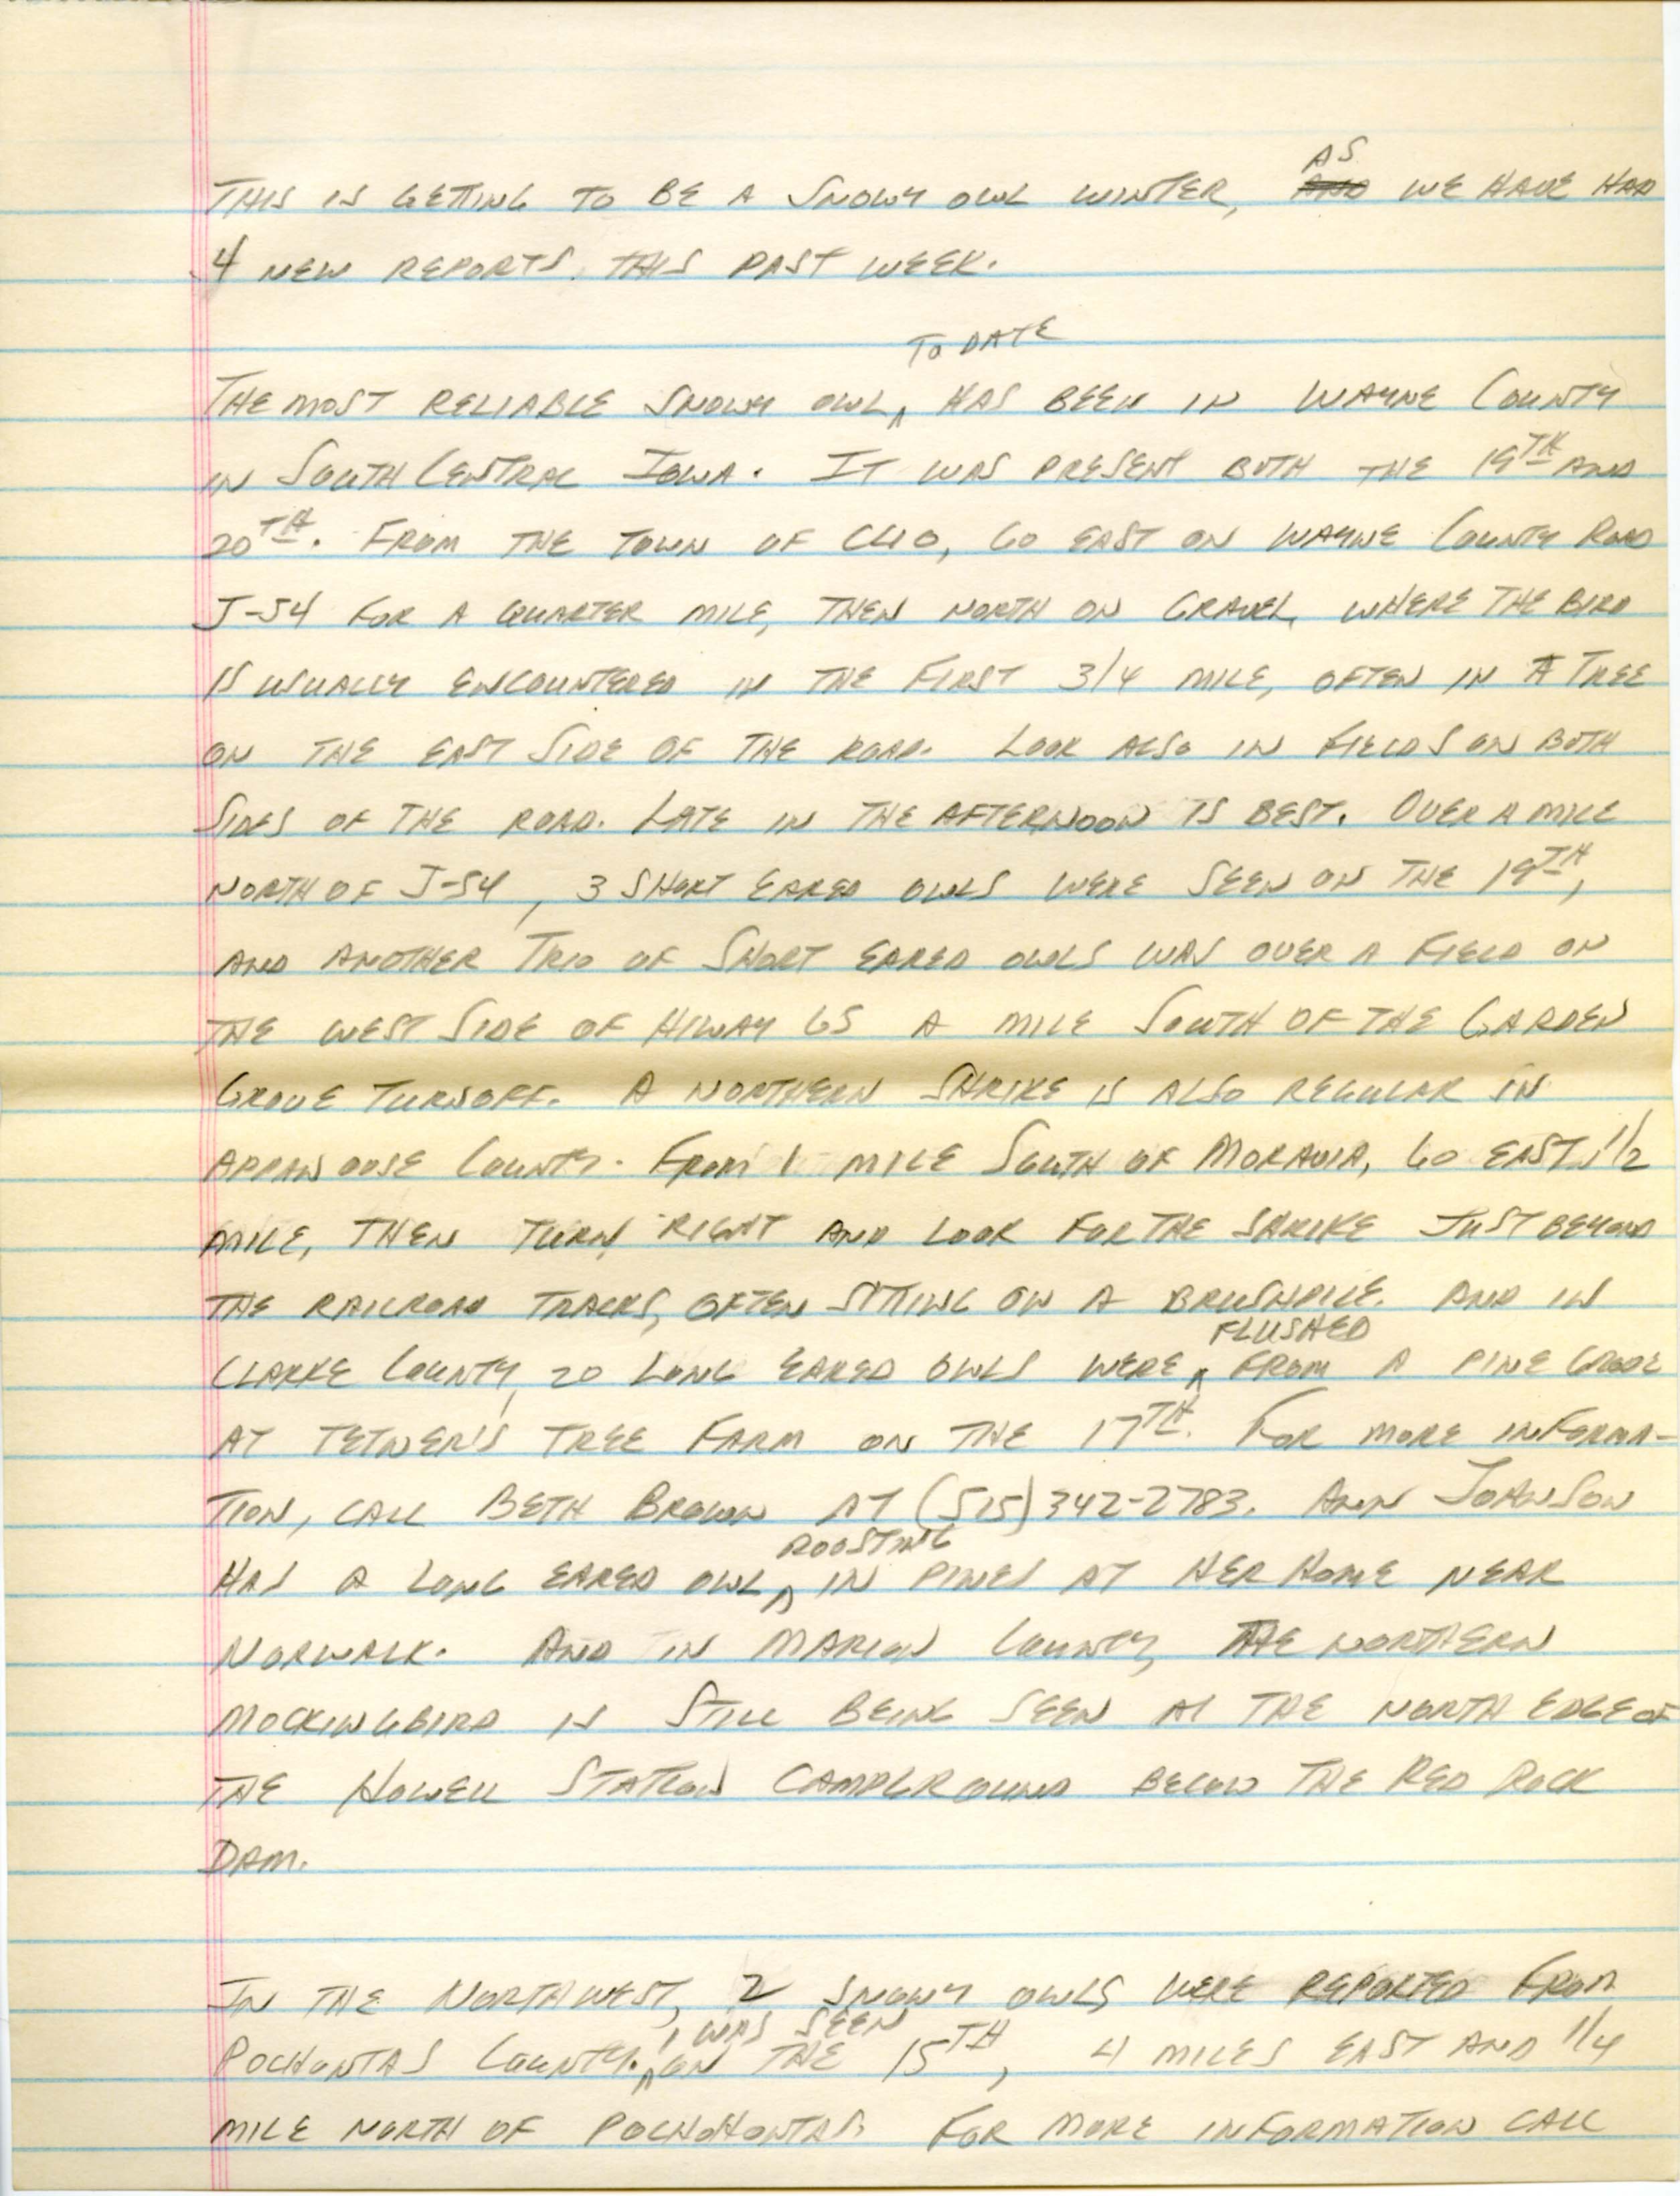 Iowa Birdline update, January 21, 1991 notes